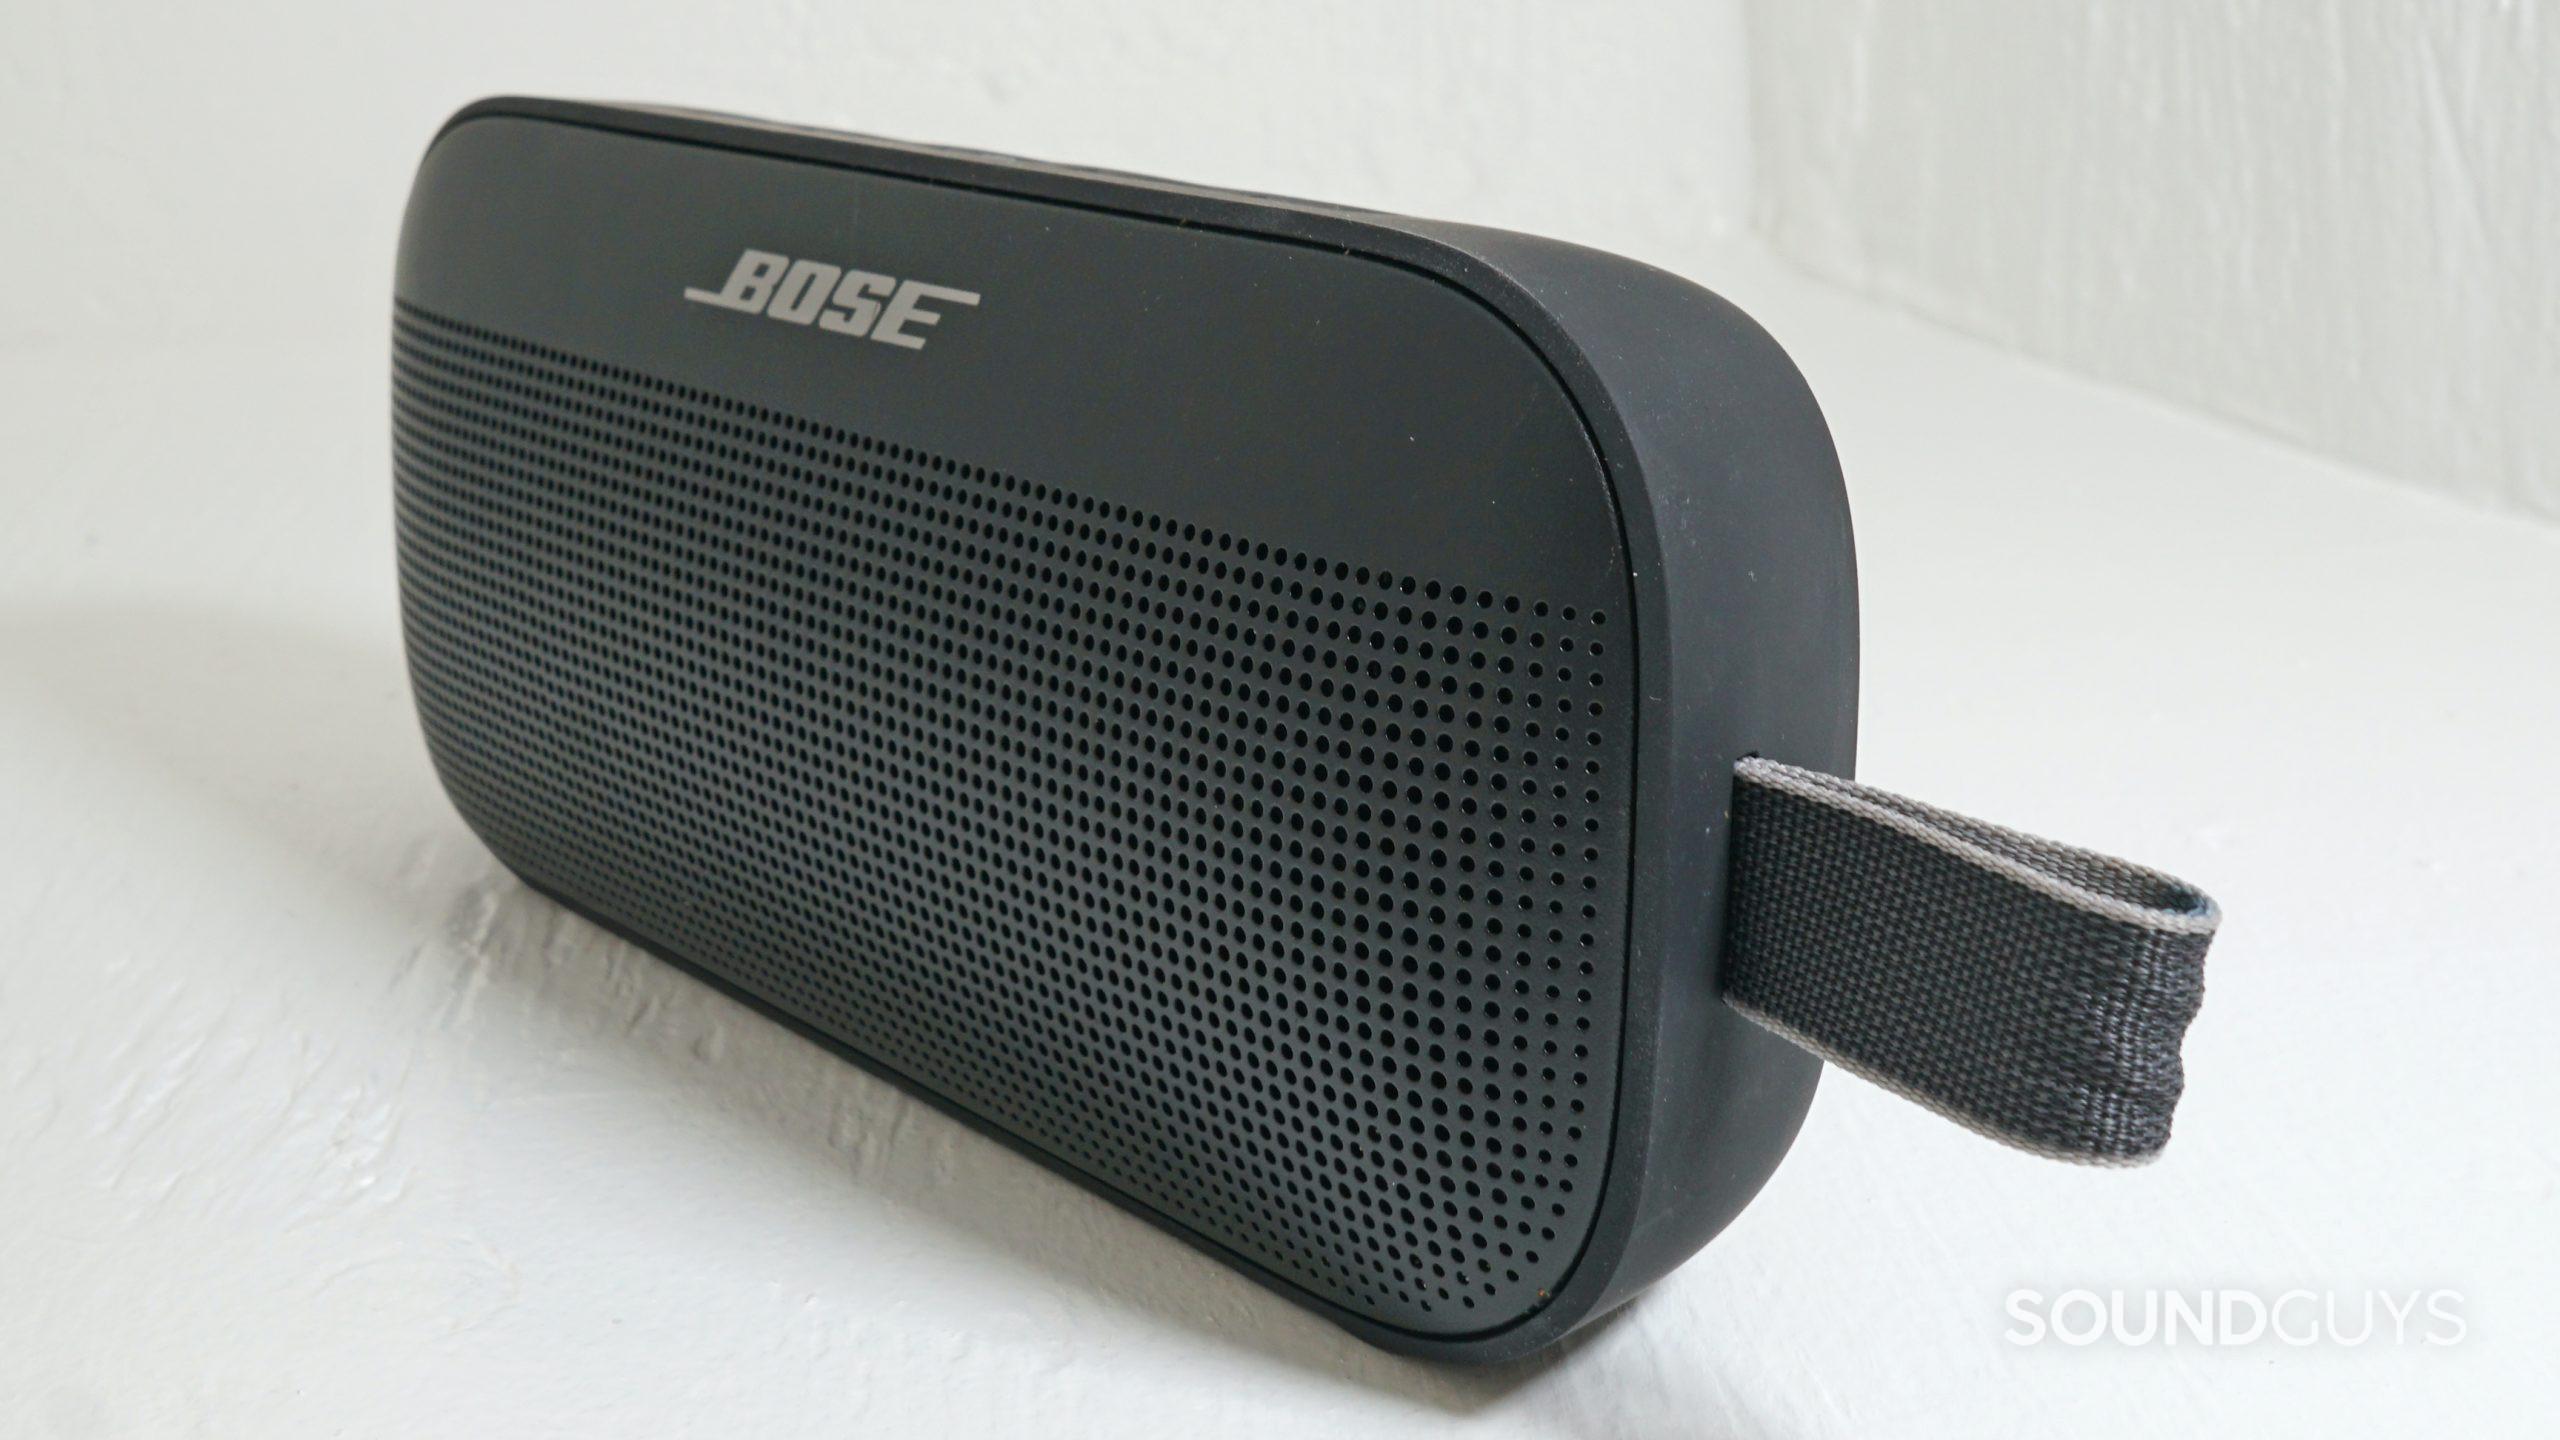 The black Bose SoundLink Flex Bluetooth speaker against a white background.